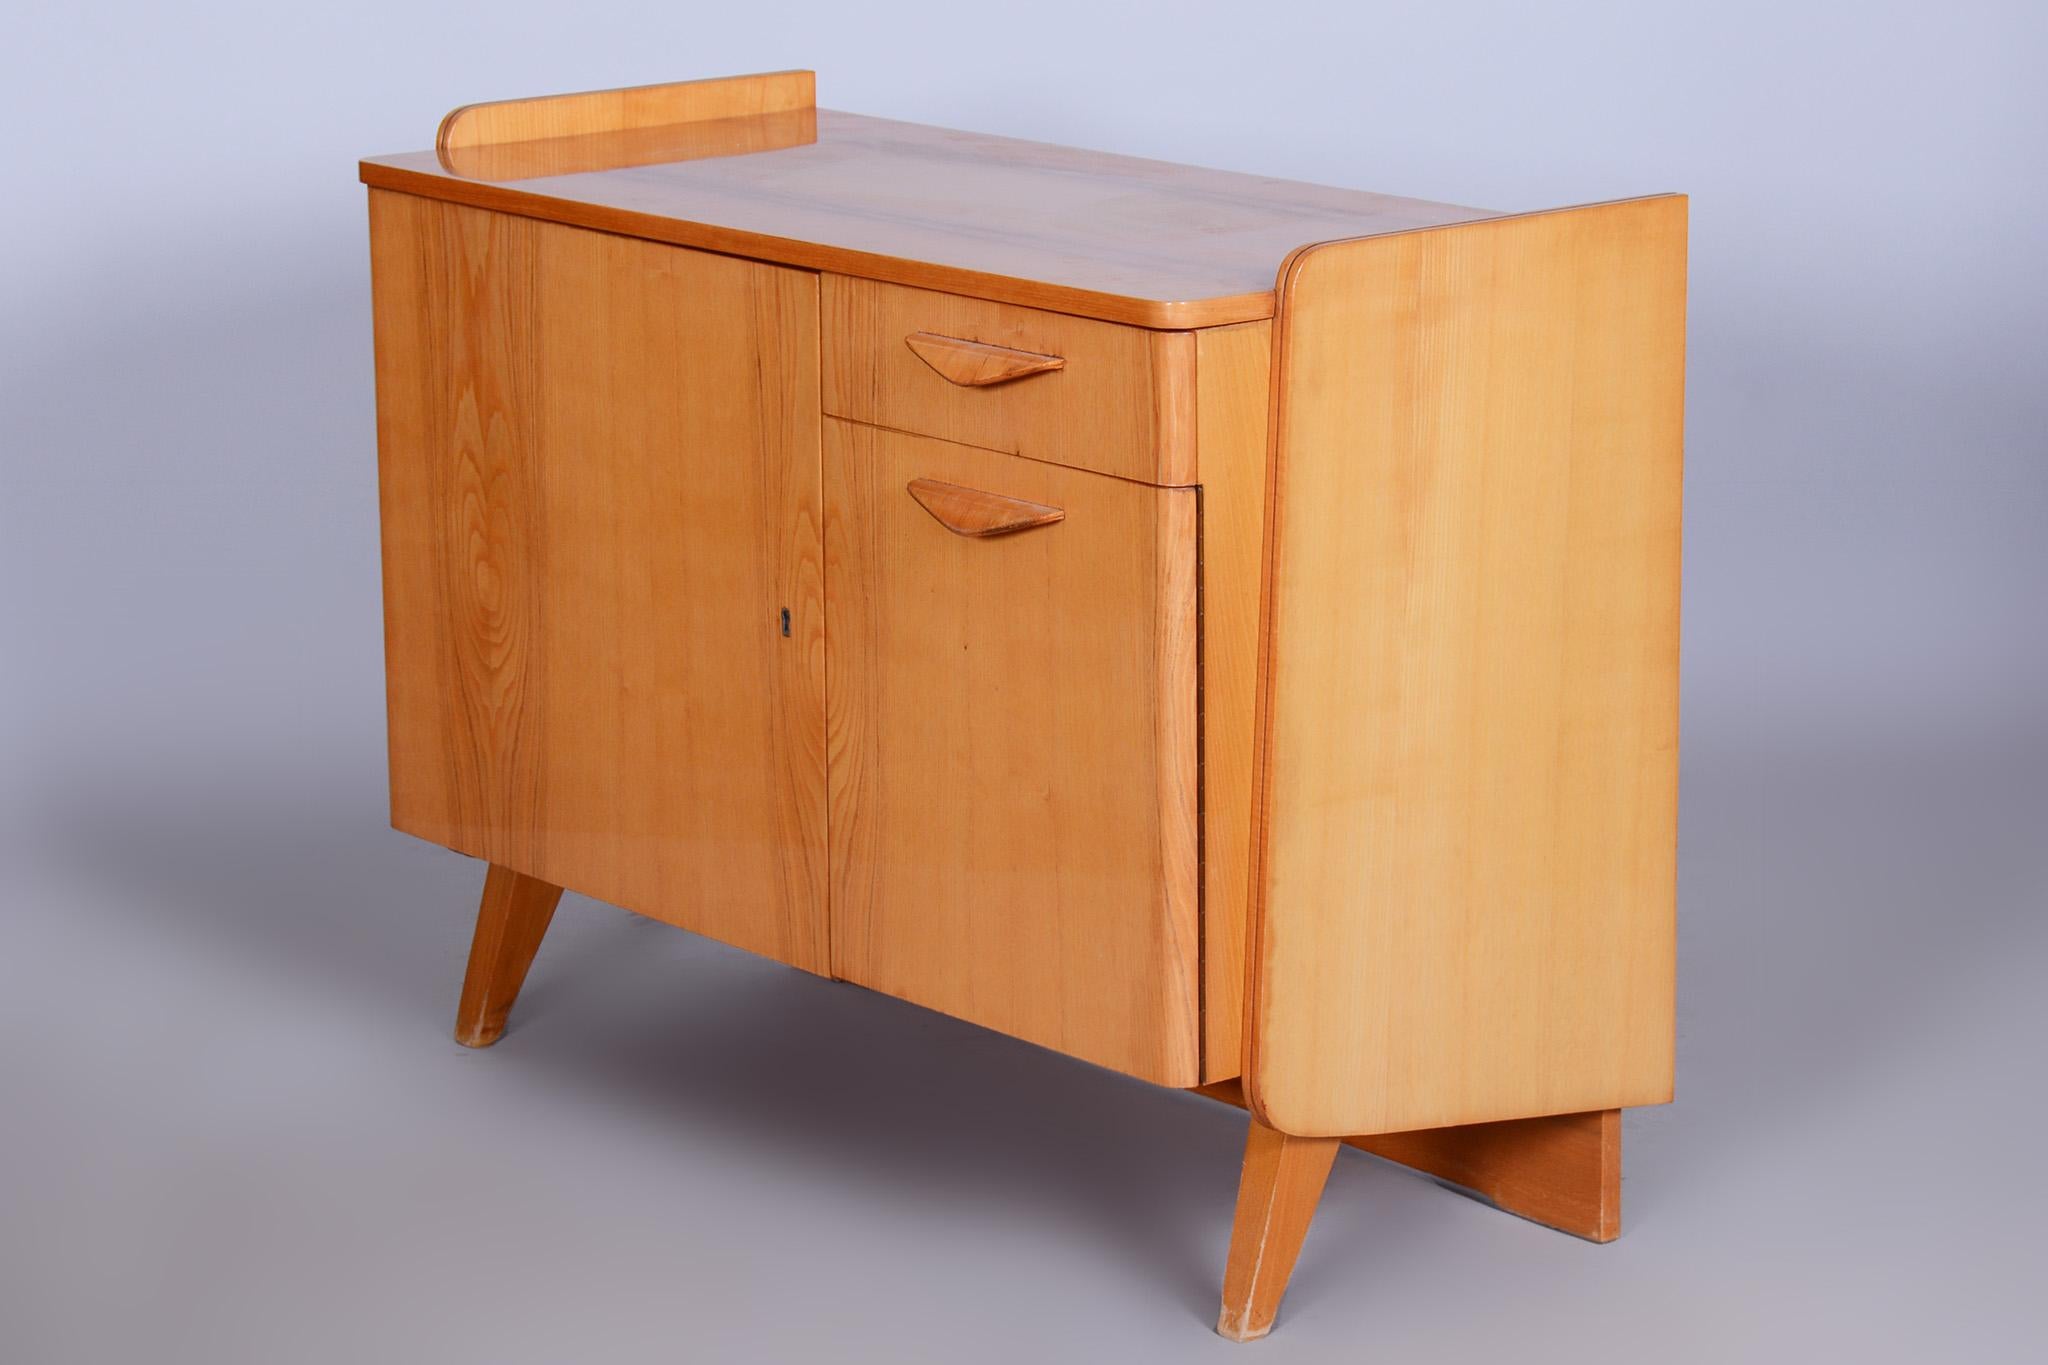 Original Midcentury Ash Small Cabinet Made by Tatra Pravenec, Czechia, 1950s For Sale 1